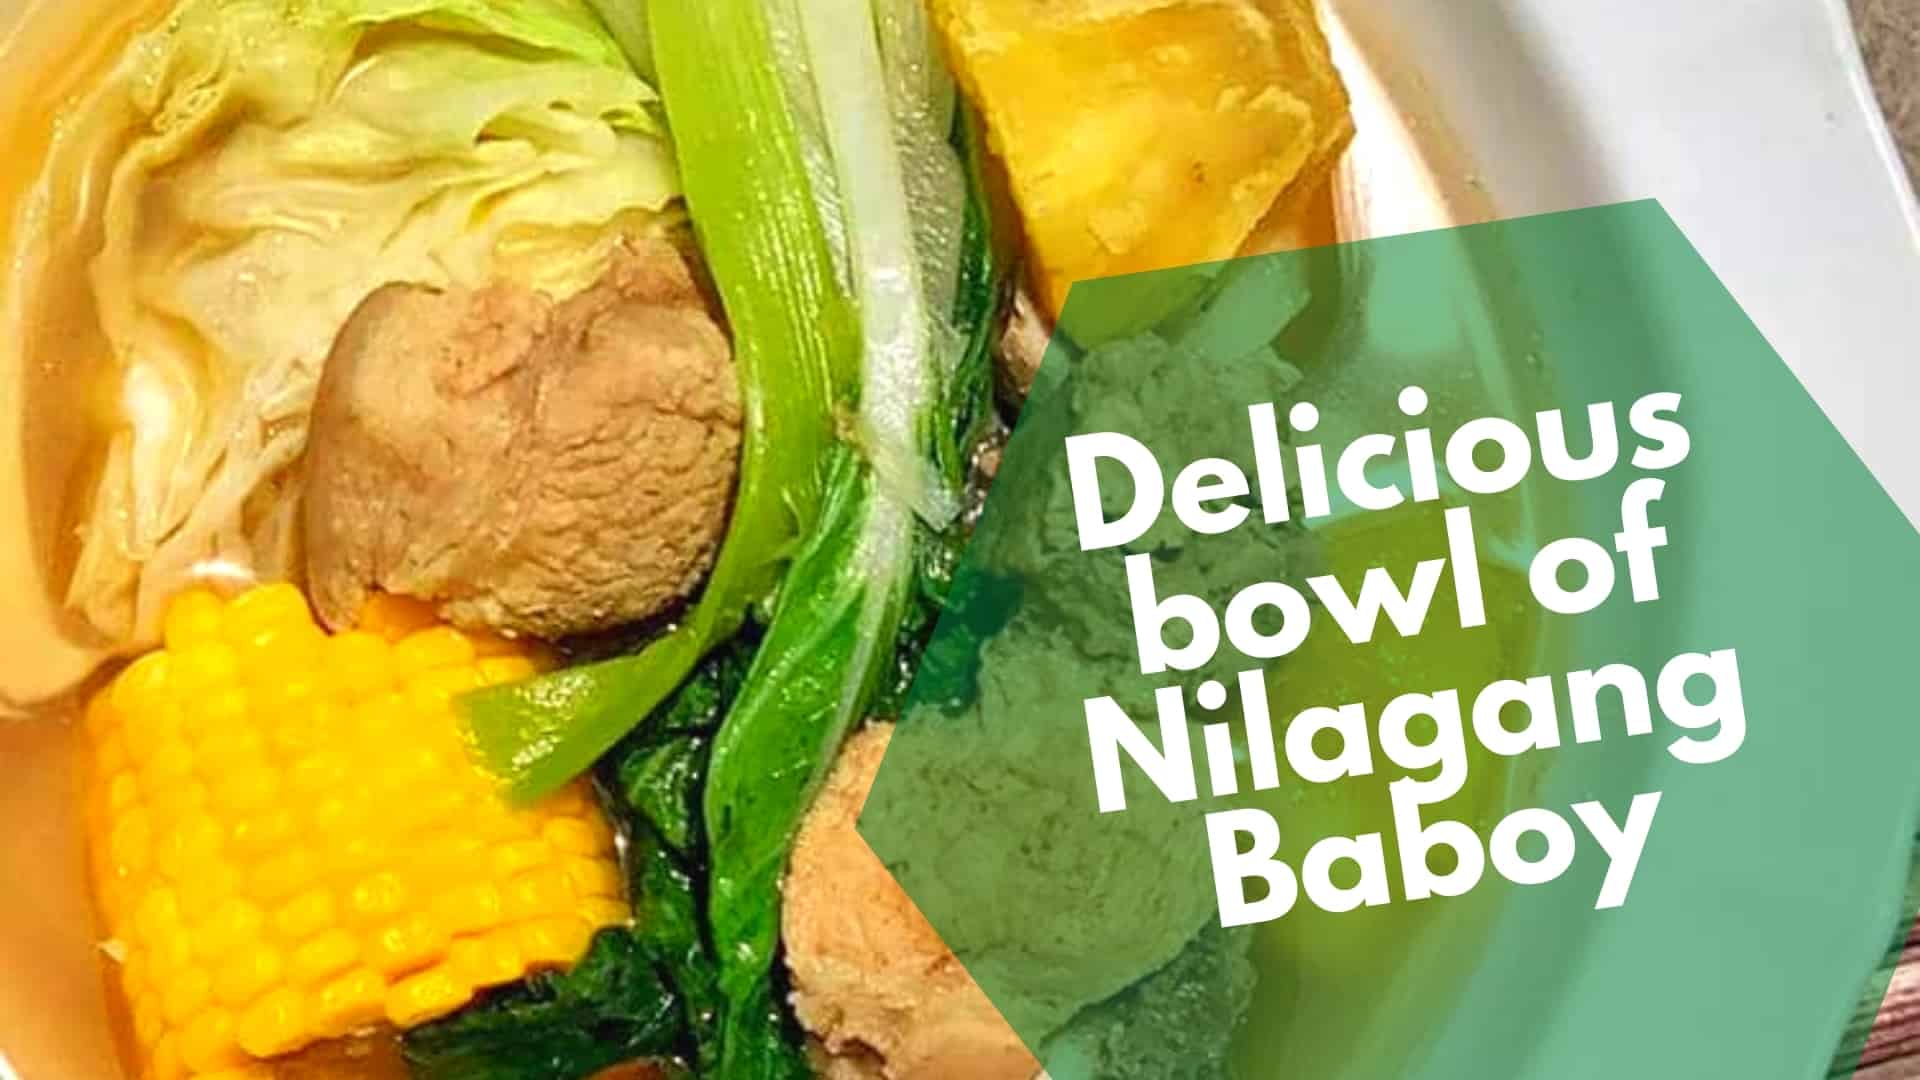 Resep Babi Nilagang (Nilaga Babi): Sup babi rebus Filipina